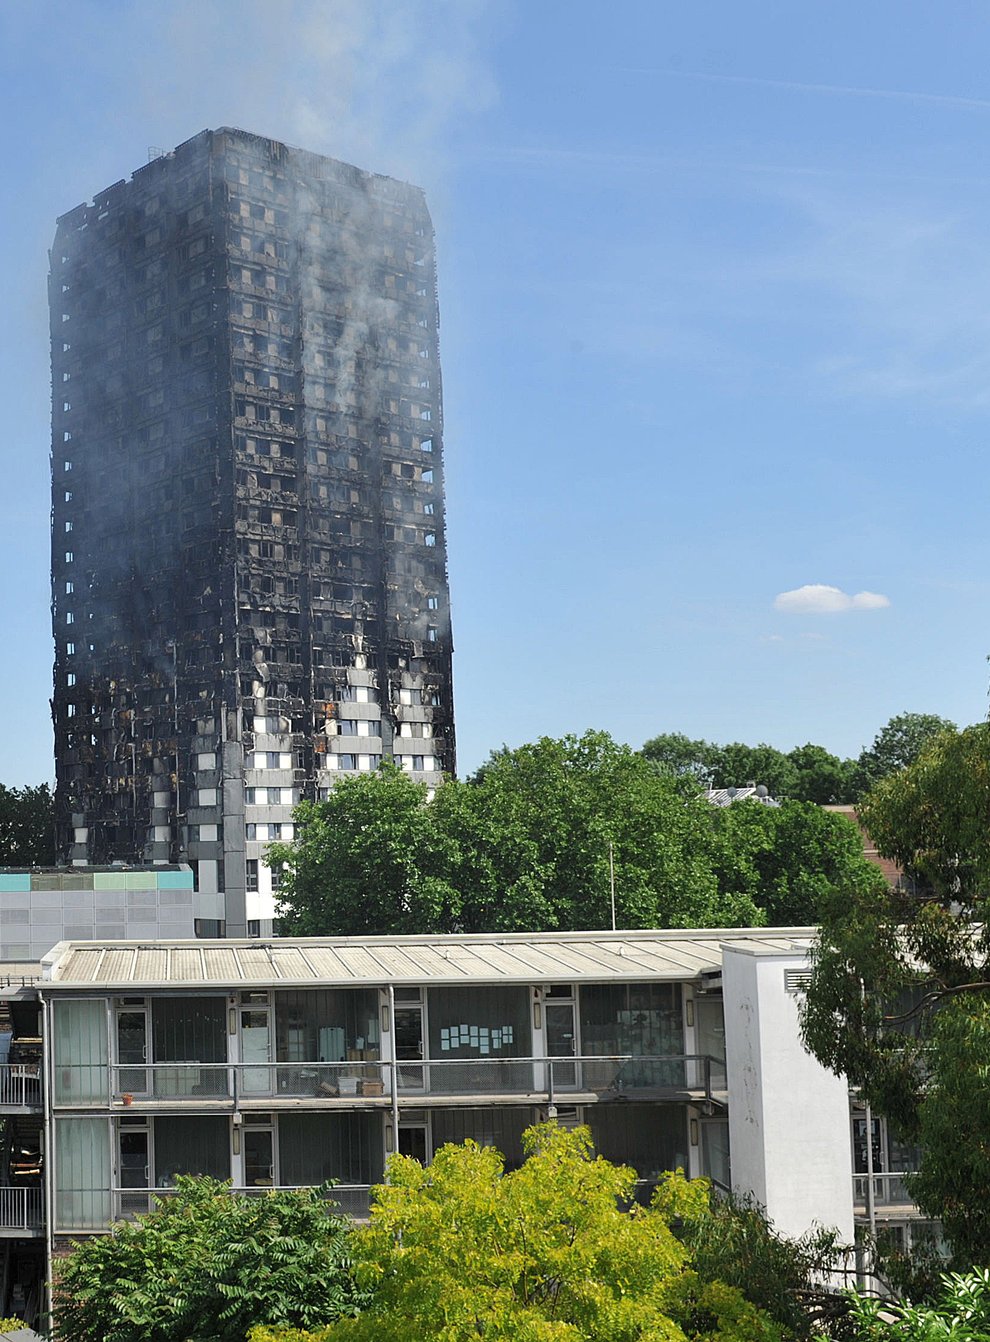 The west London tower block blaze killed 72 people on June 14 2017 (PA)